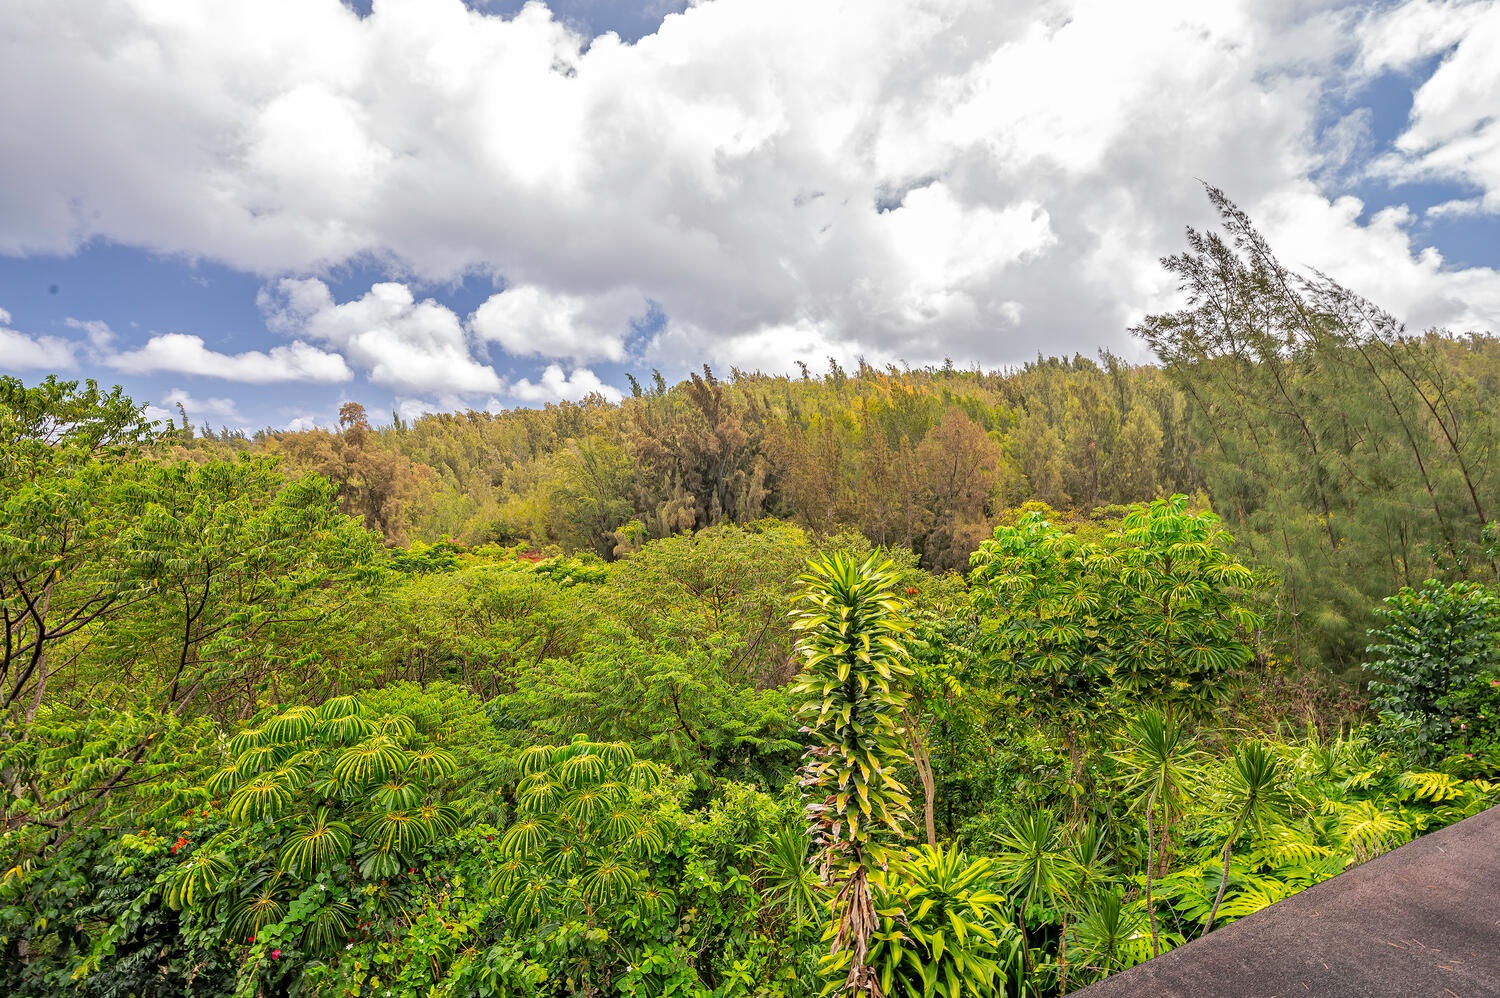 Haleiwa Vacation Rentals, Mele Makana - The Pupukea Paumalu Forest Reserve